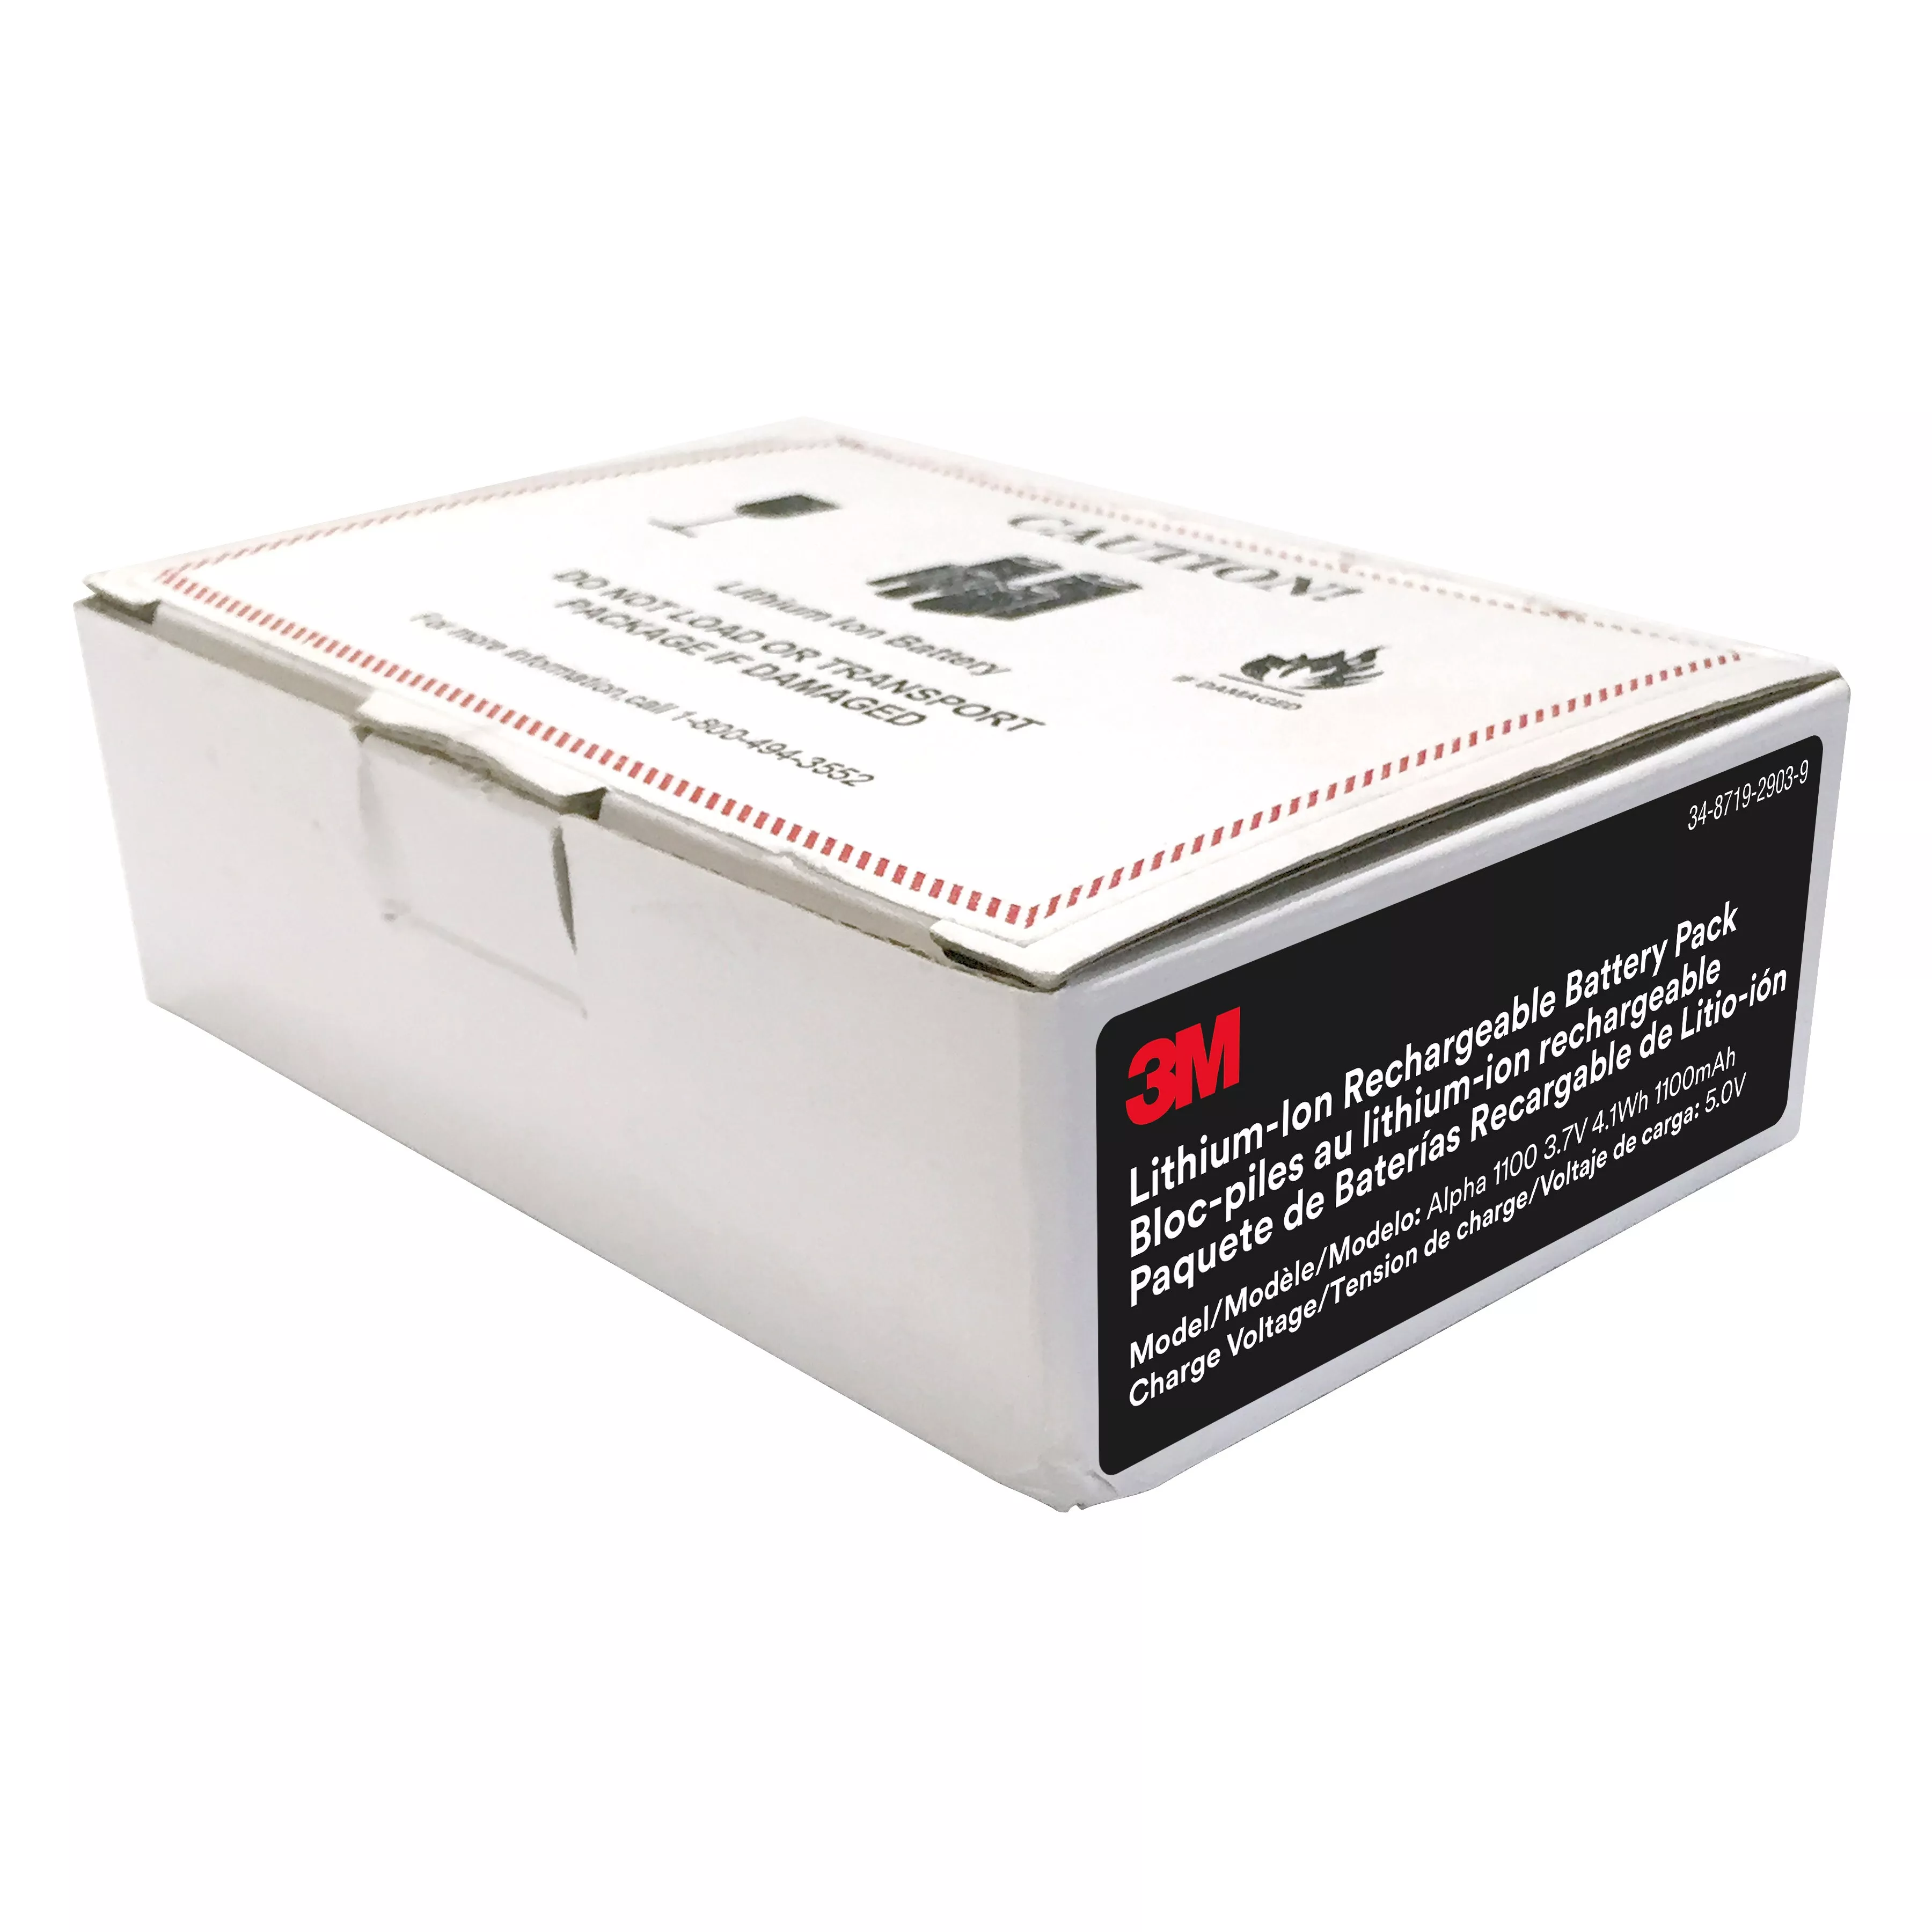 3M™ Rechargeable Li-Ion Battery Pack, Alpha1100, 8 each/case